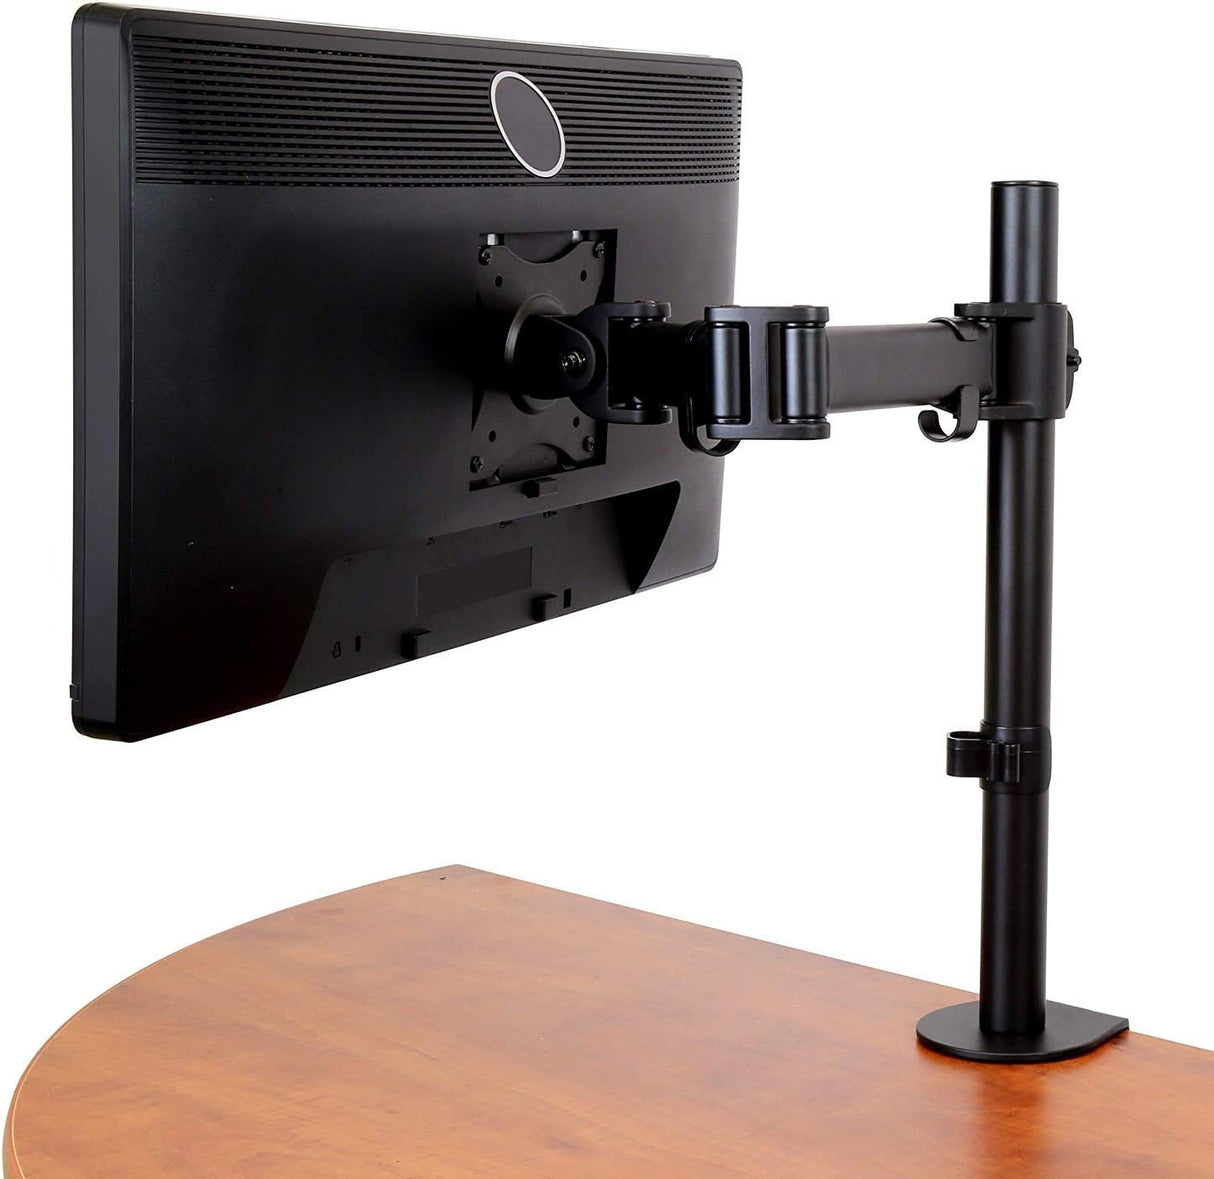 StarTech.com Desk Mount Monitor Arm for up to 34" VESA Compatible Displays - Articulating Pole Mount Single Monitor Arm - Ergonomic Height Adjustable - Desk Clamp/Grommet (ARMPIVOTB) - Black